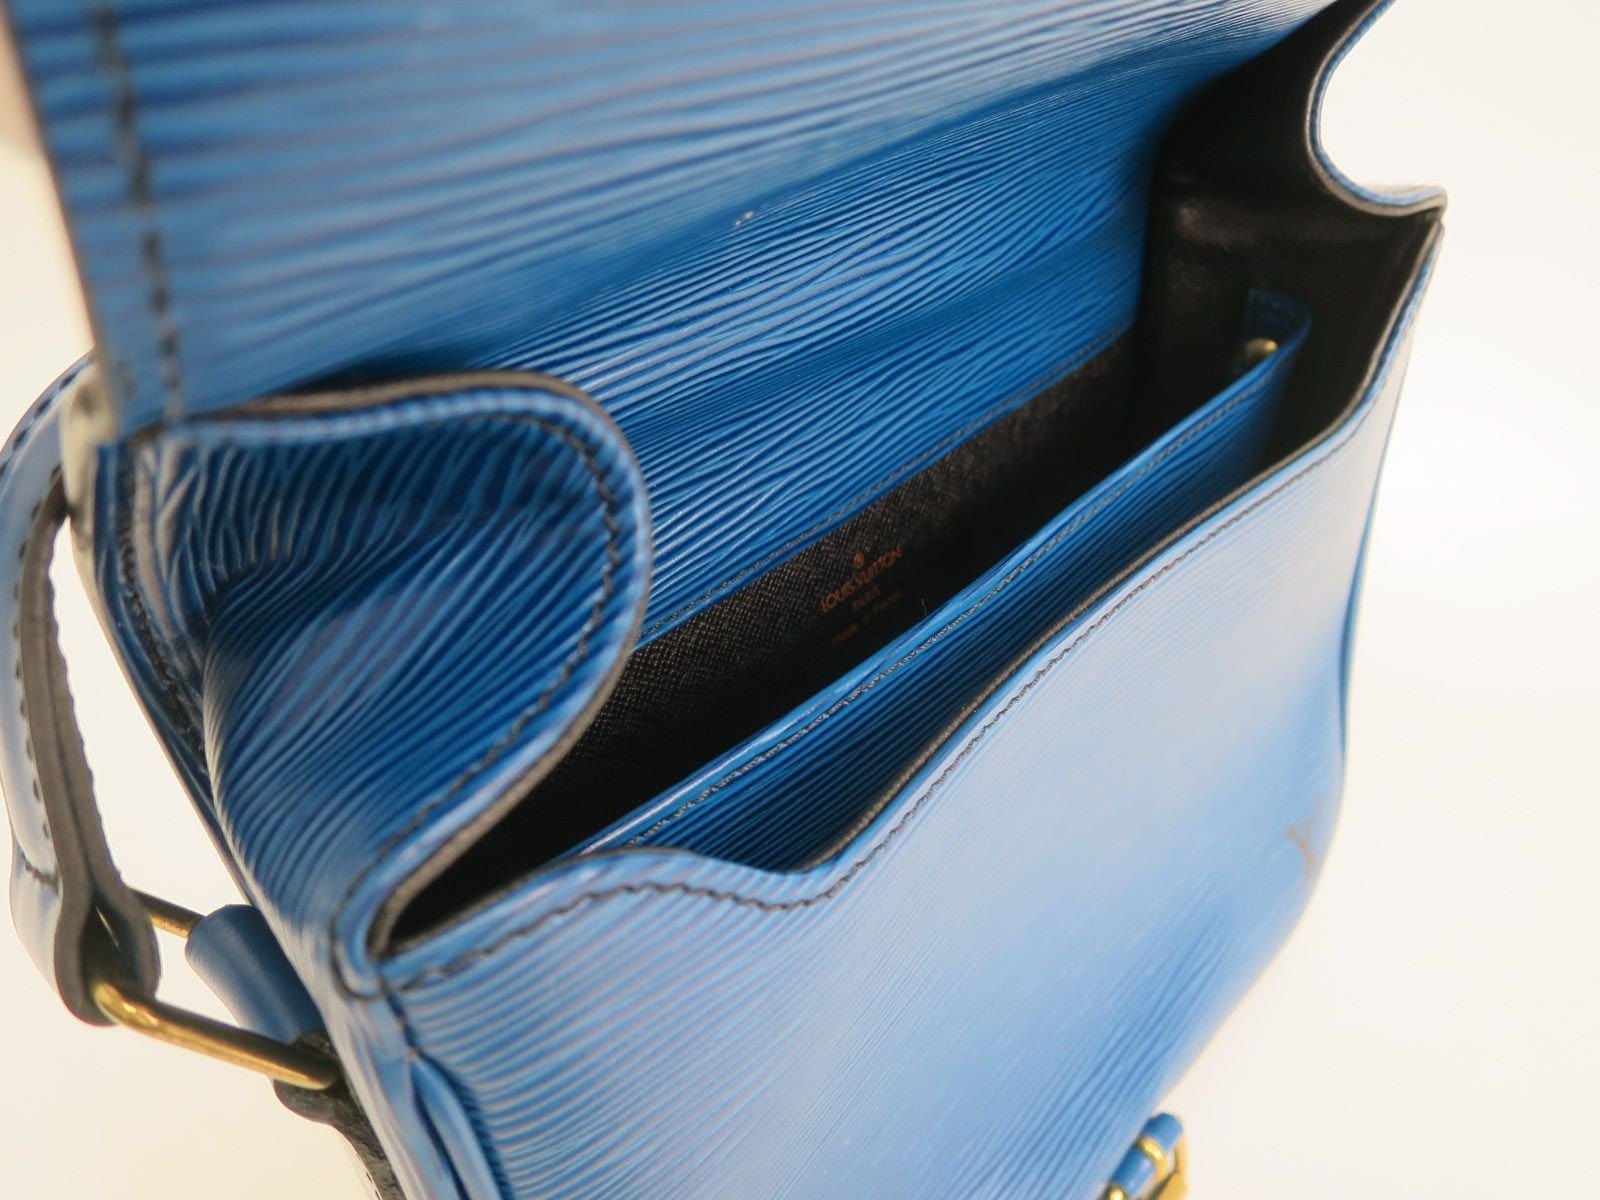 Louis Vuitton Blue Epi Leather Toledo Collapsible Coin Pouch